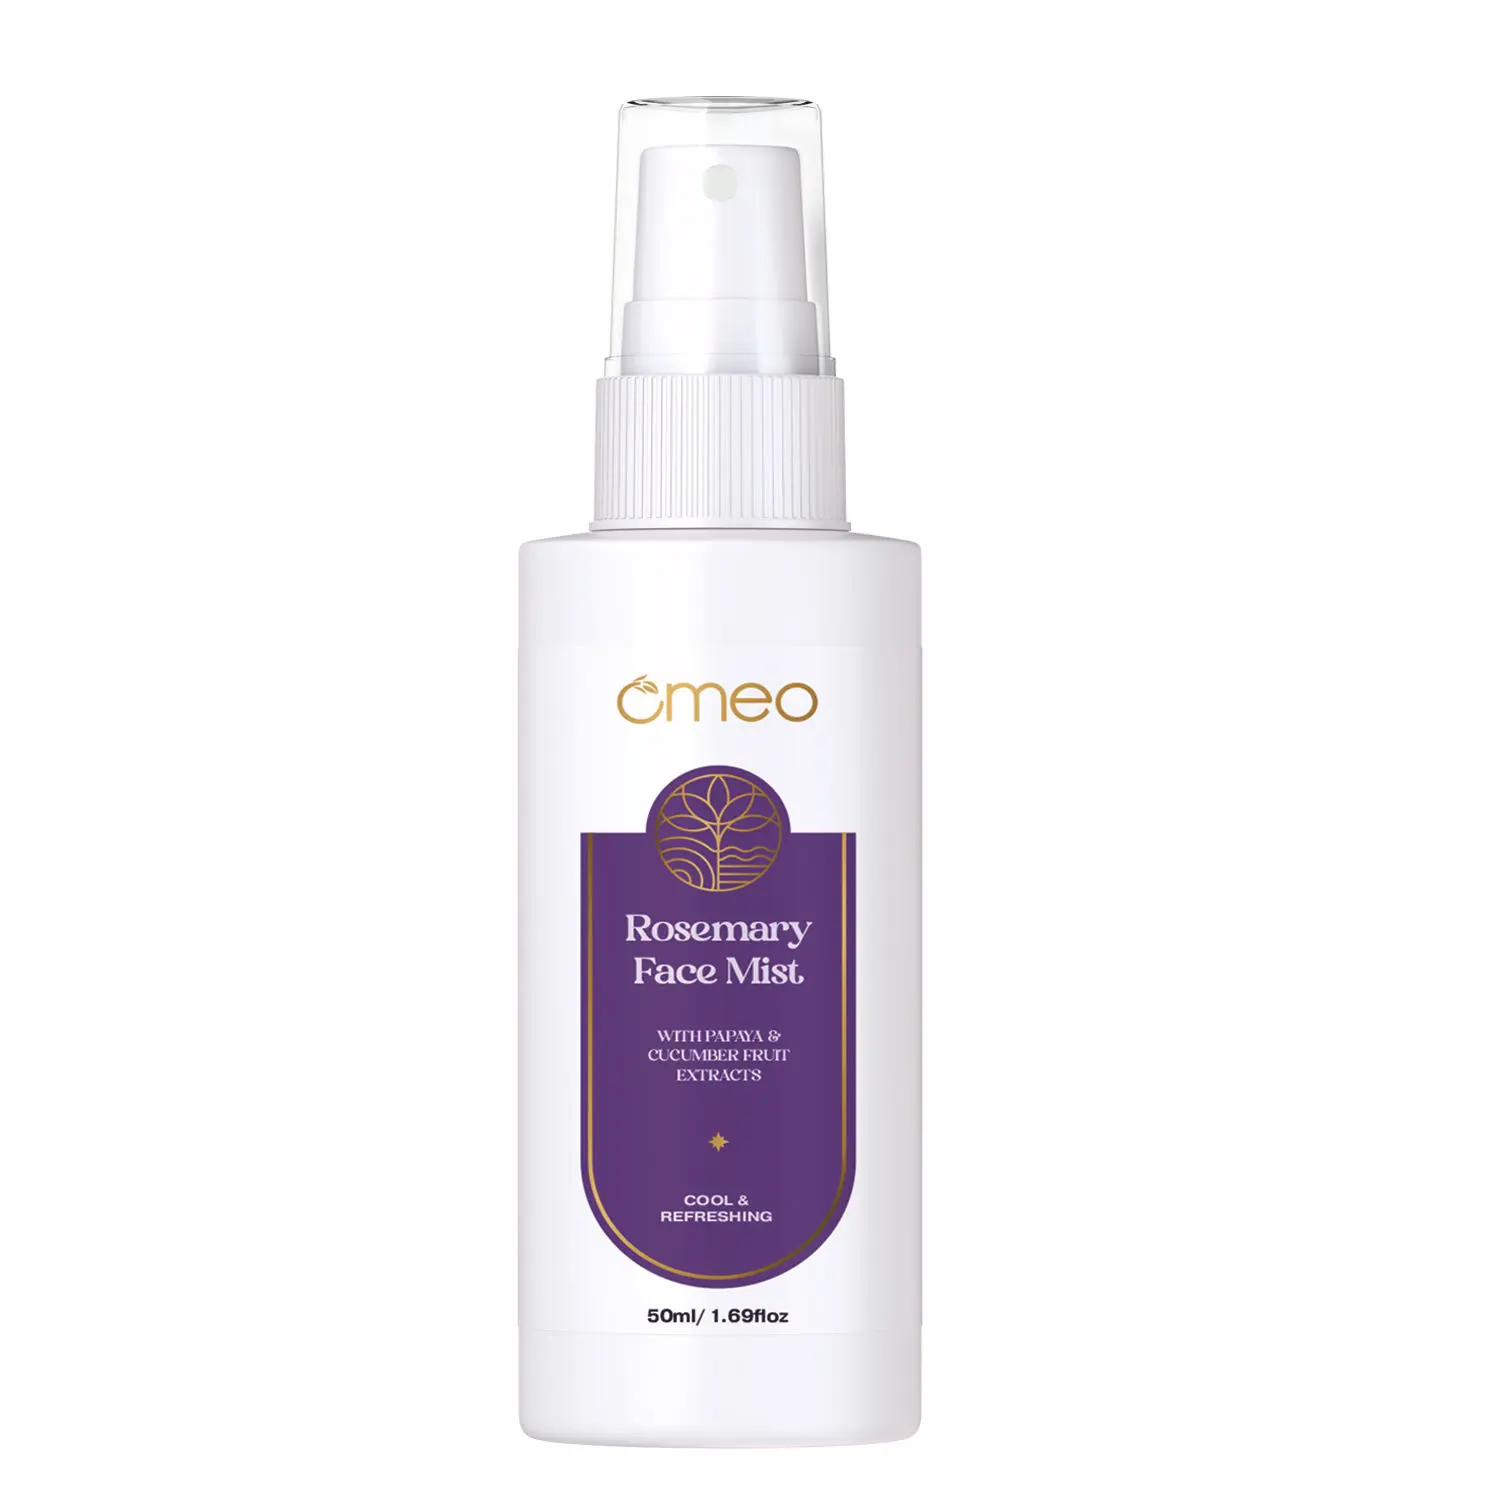 Omeo Rosemary Face Mist/Toner-50ml for Glowing Skin, Hydration & Make-up Men & Women